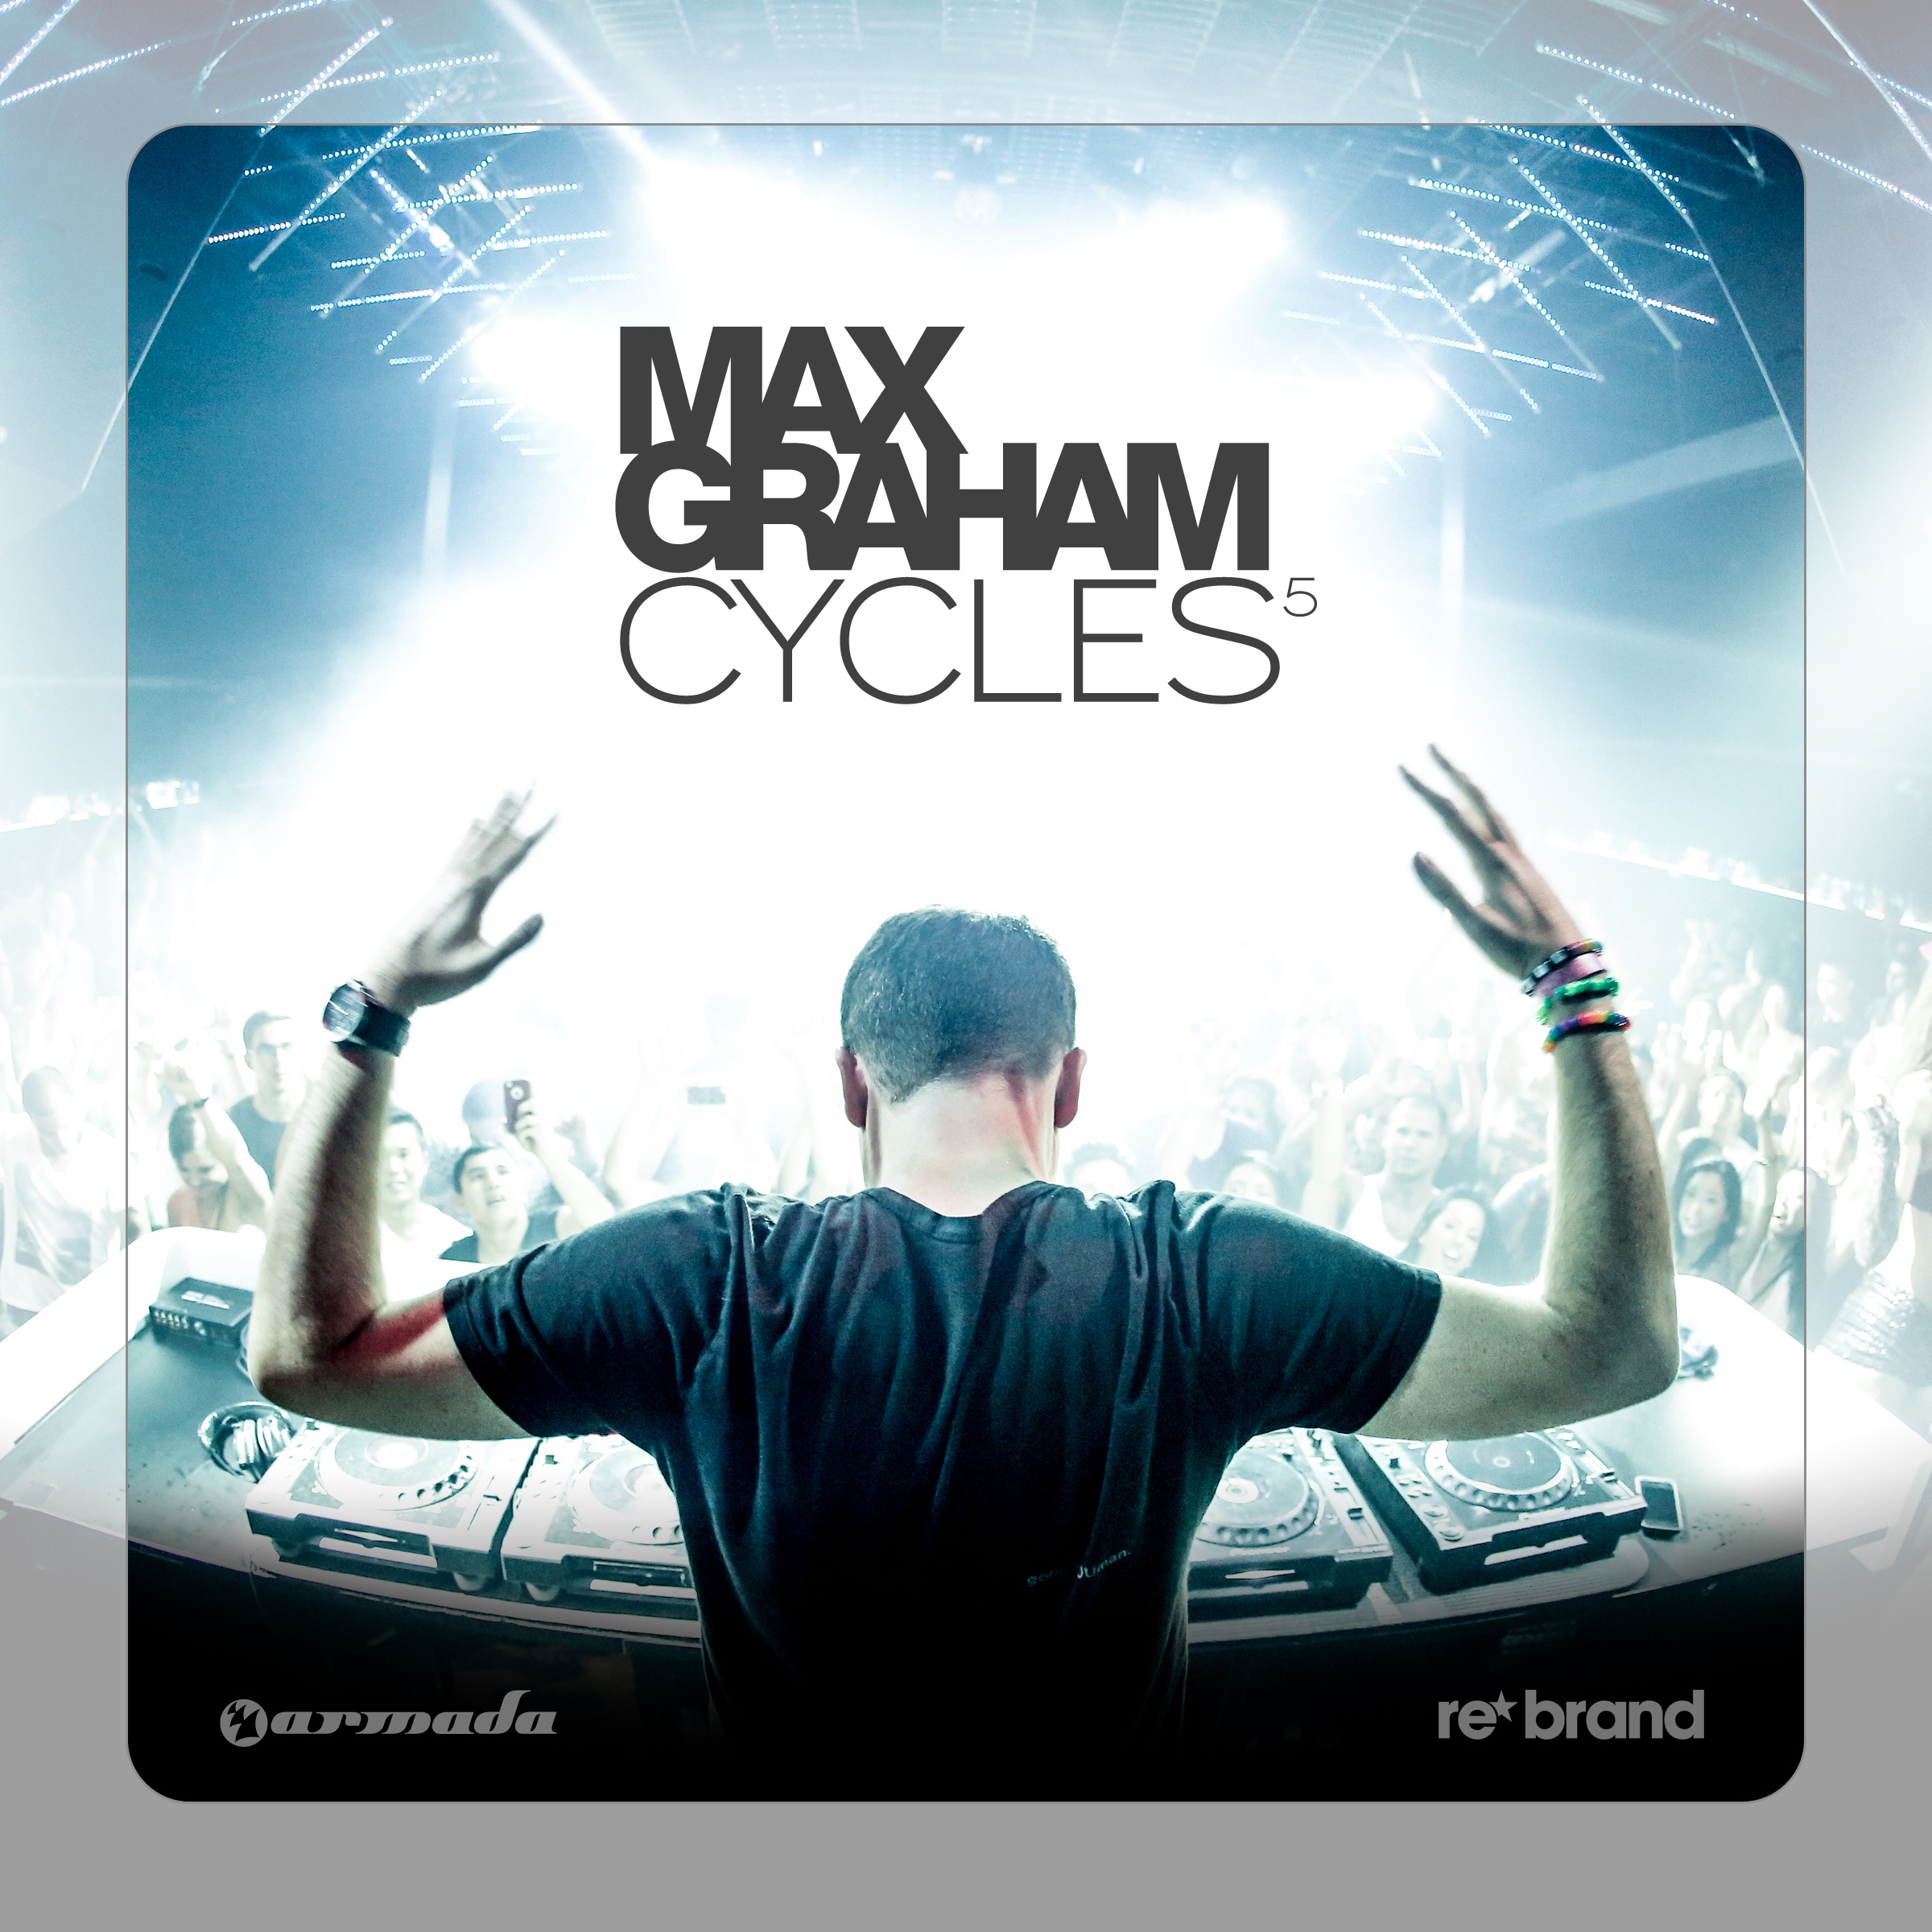 Cycles 5 (Full Continuous DJ Mix)